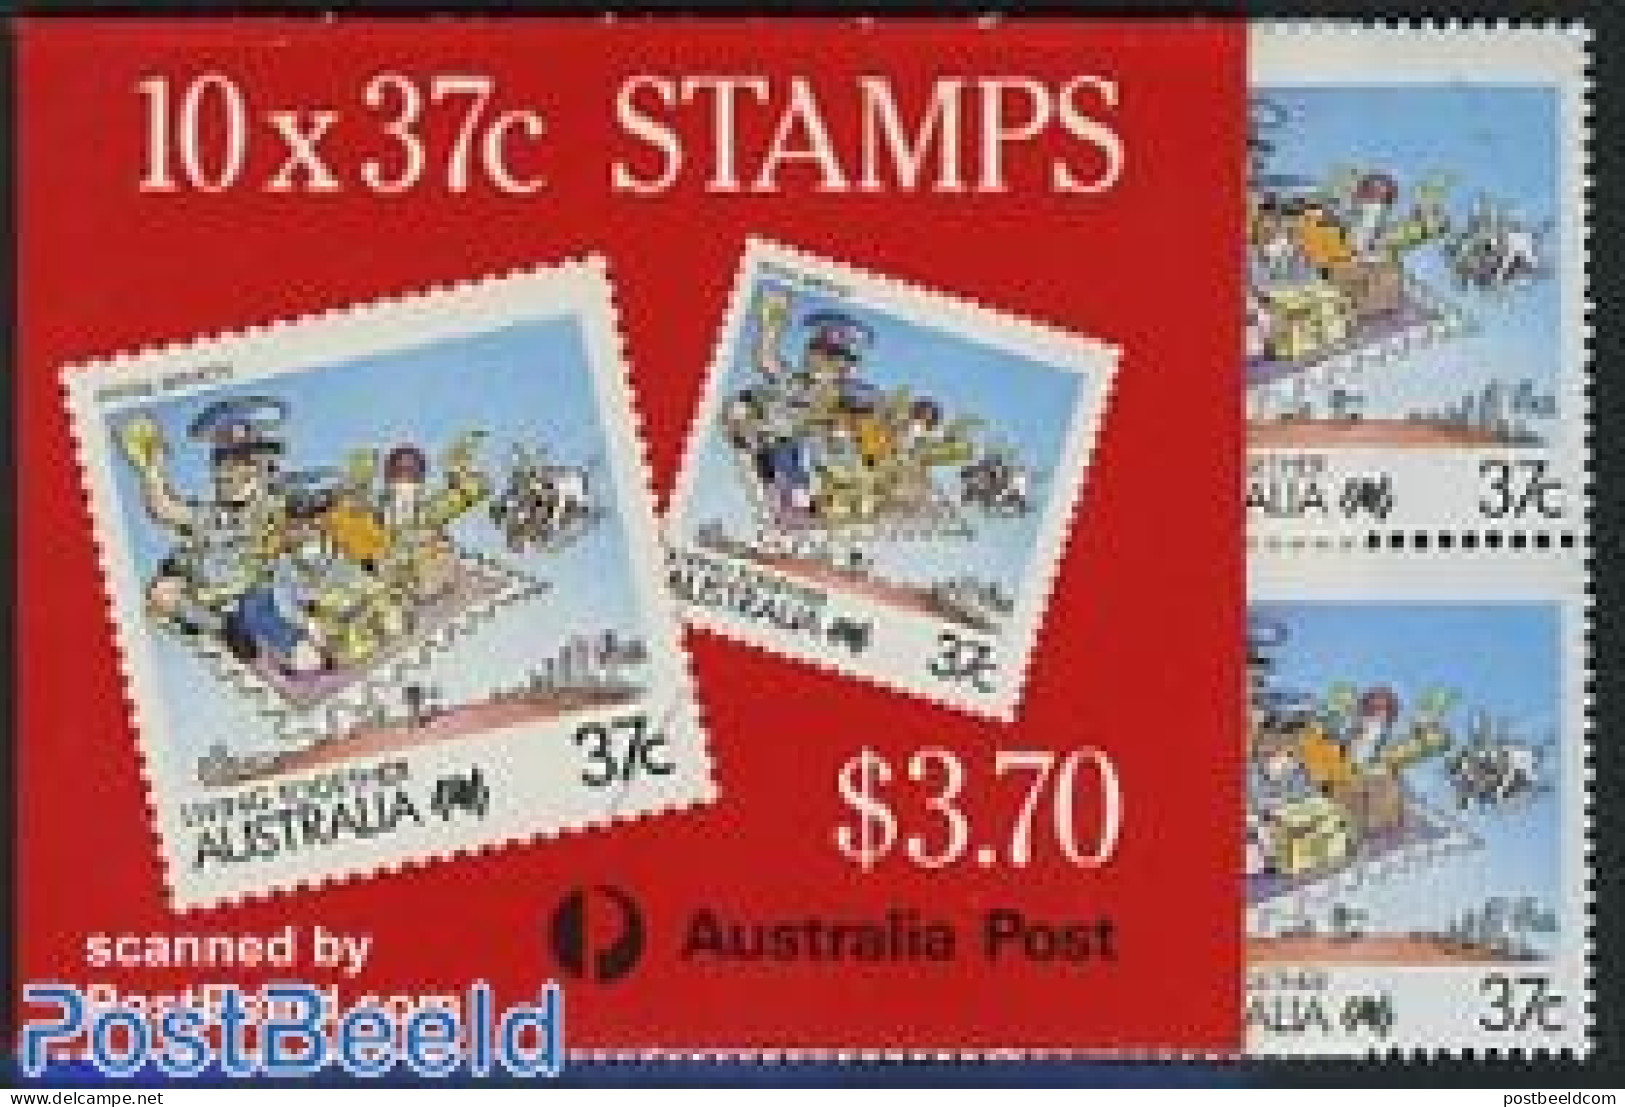 Australia 1988 Living Together Booklet, Mint NH, Post - Stamp Booklets - Nuevos